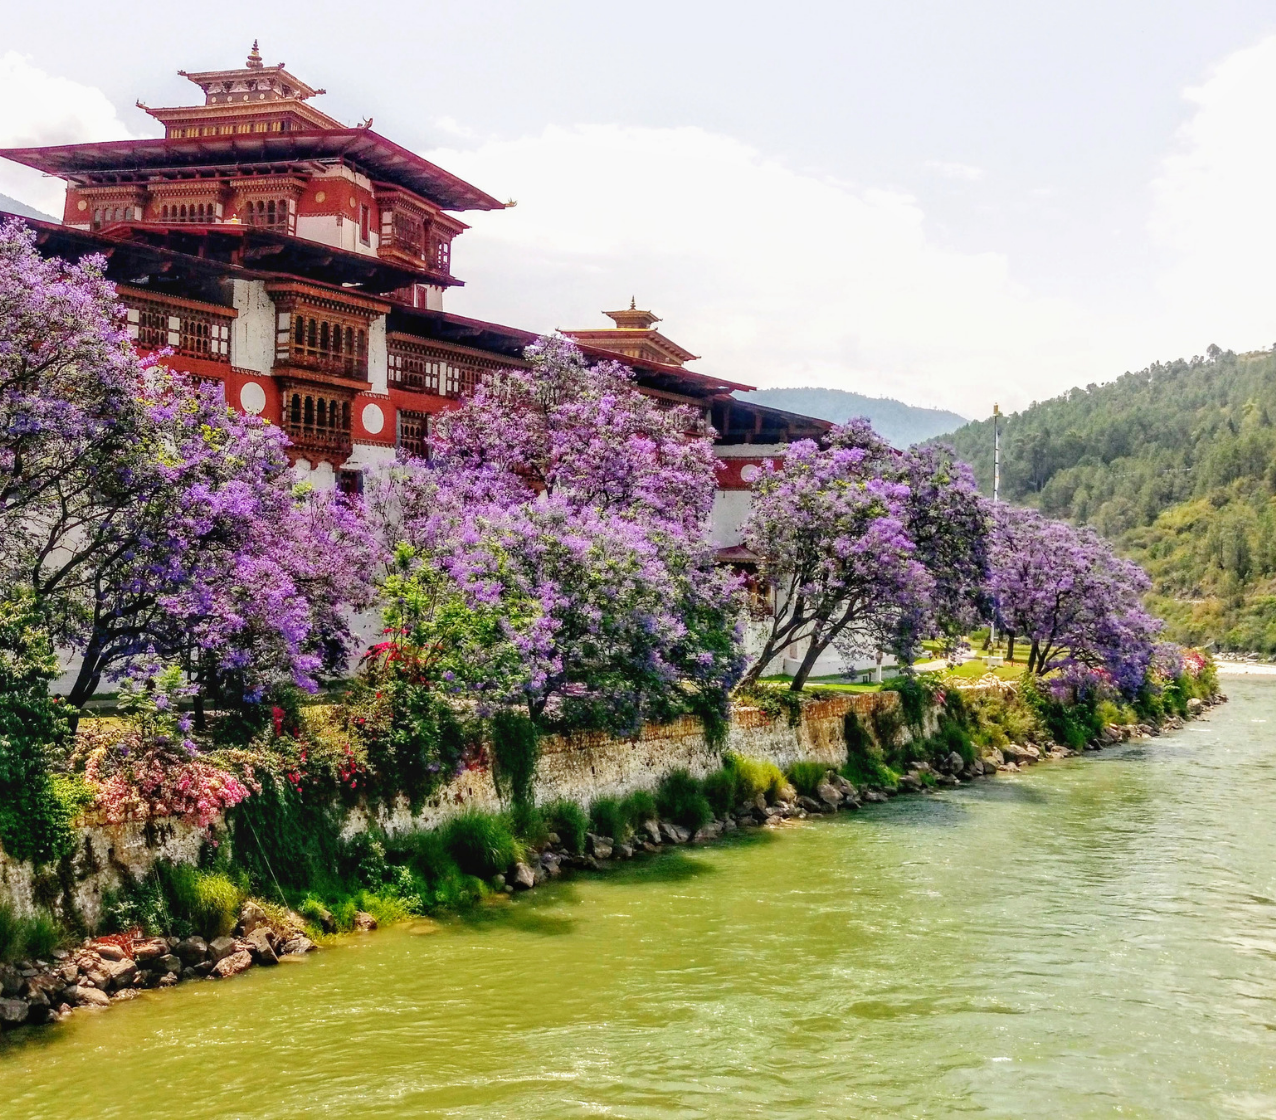 Image of Punakha dzong from Bhutan road trip